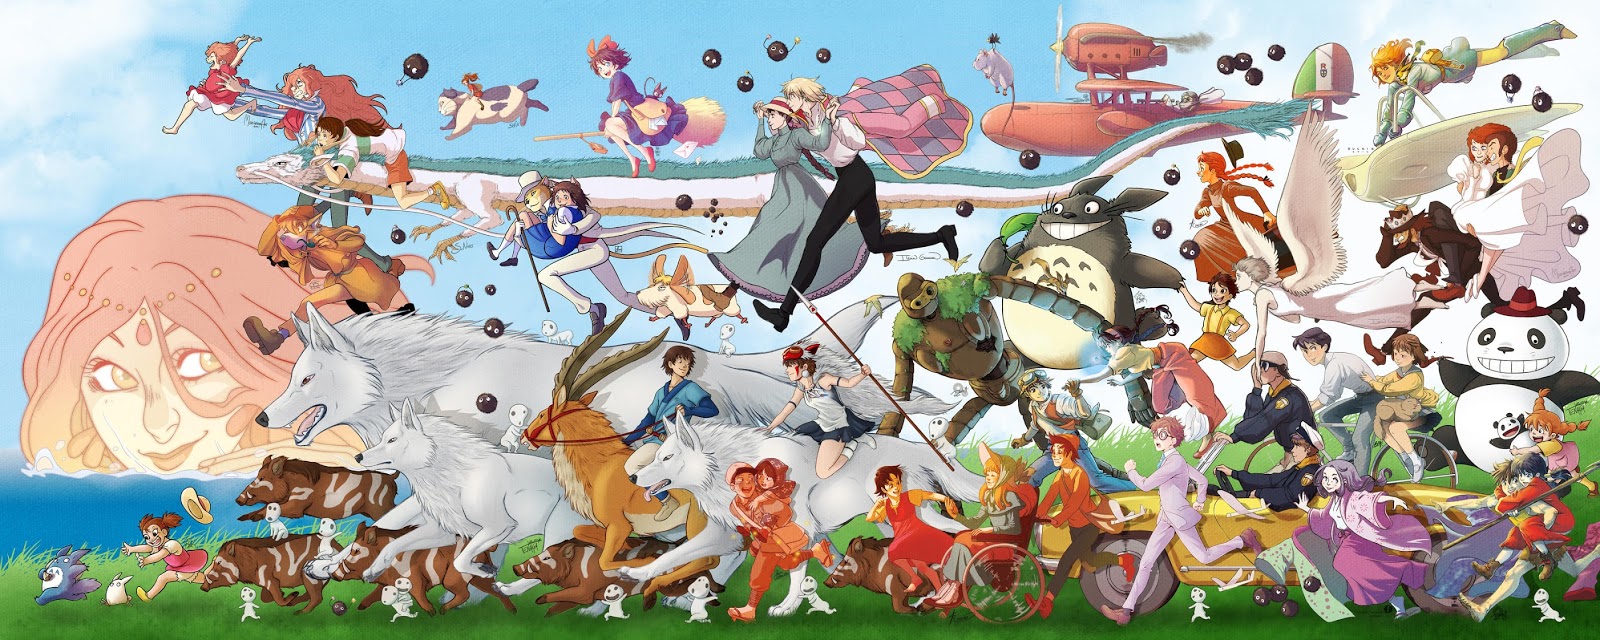 Ghibli personajes